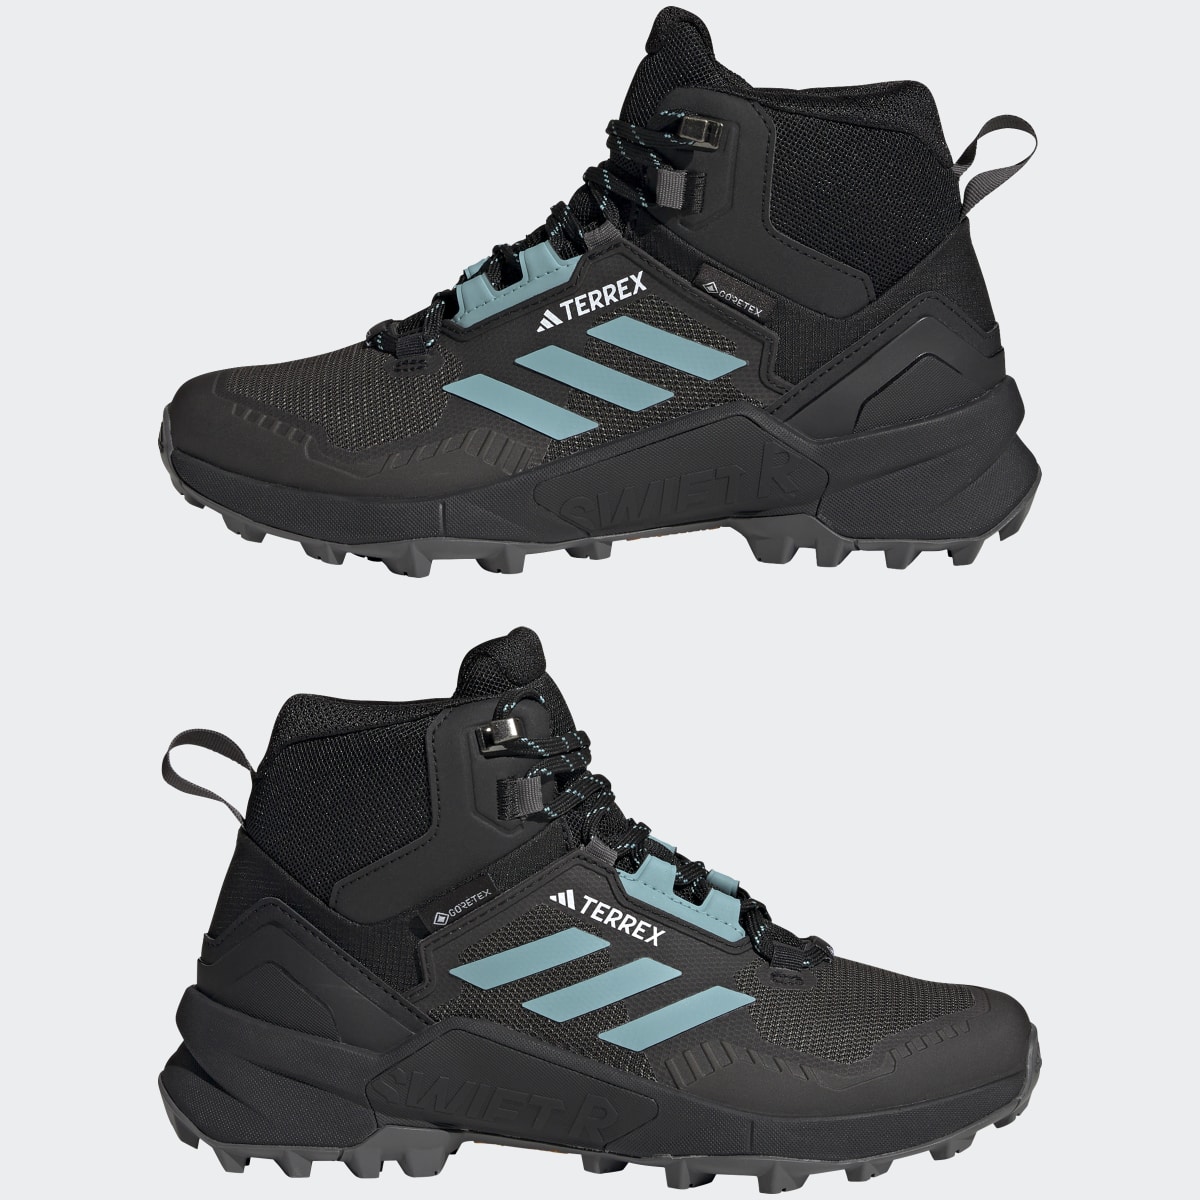 Adidas Terrex Swift R3 Mid GORE-TEX Hiking Shoes. 8